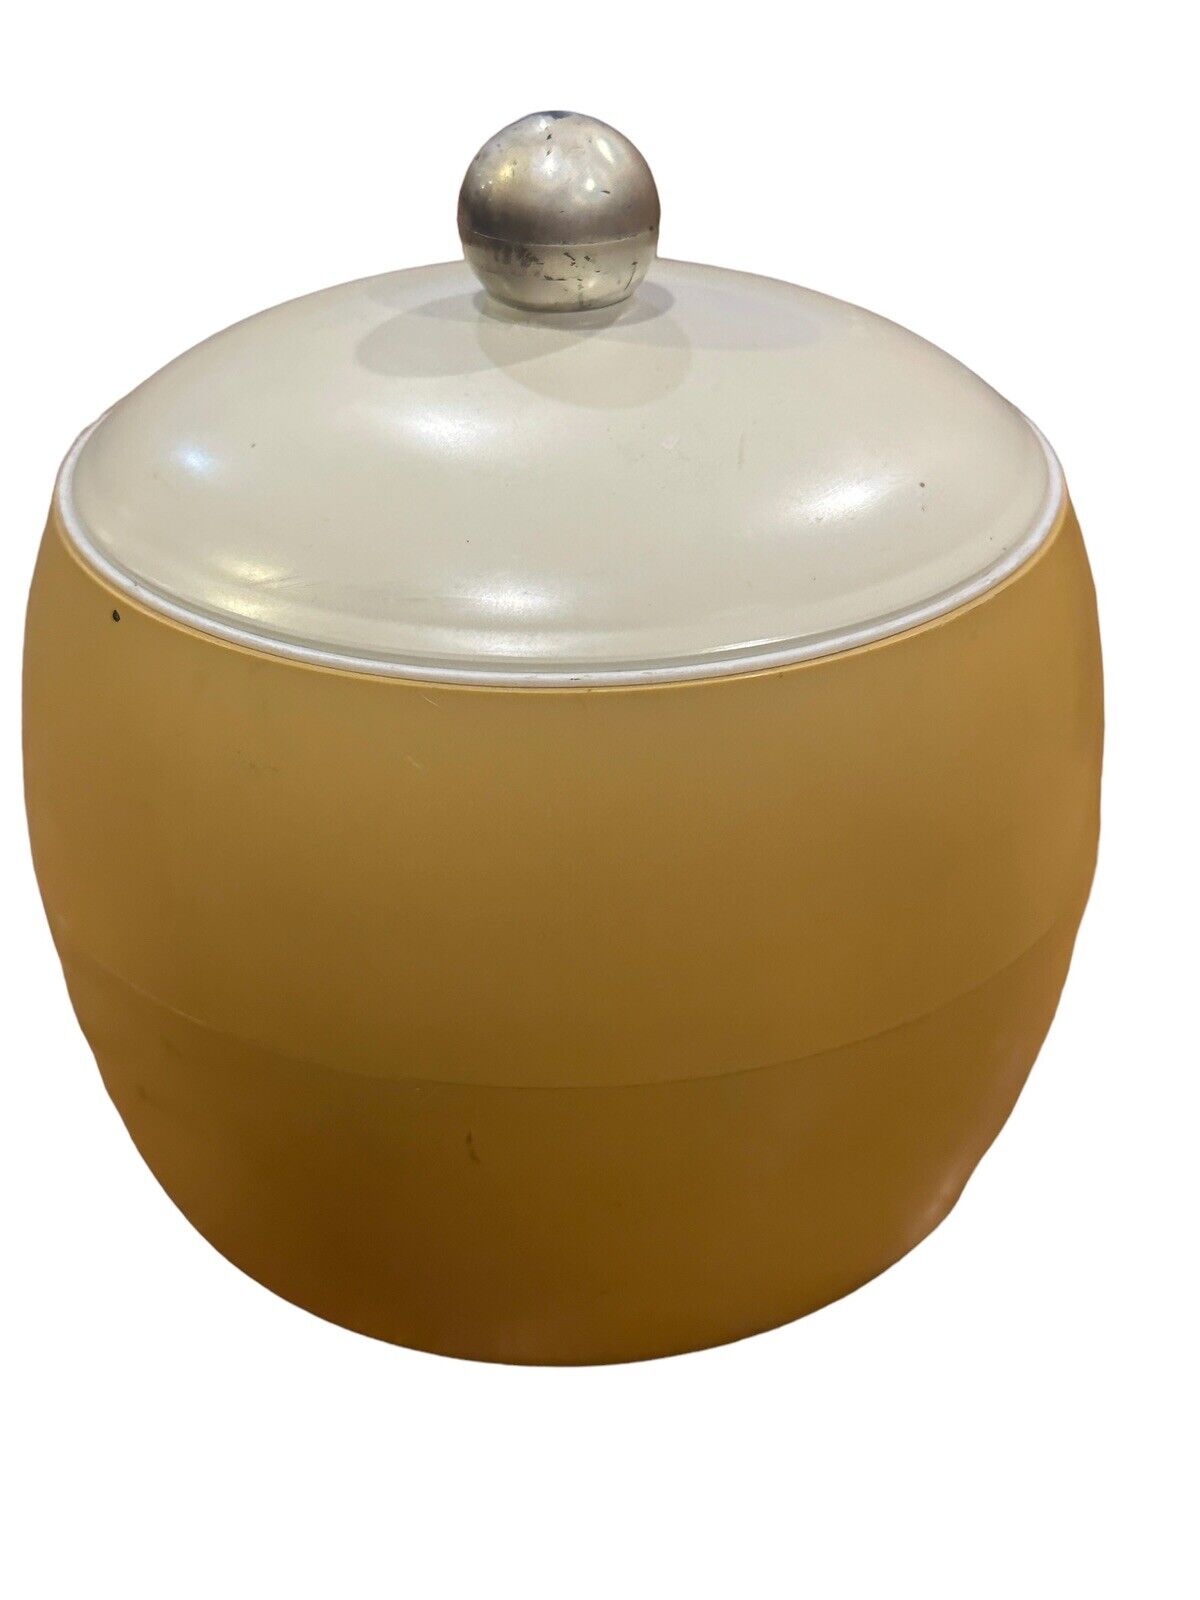 VTG GITS Ware Small Mustard Yellow Ice Bucket Plastic Made In USA Retro Kitchen